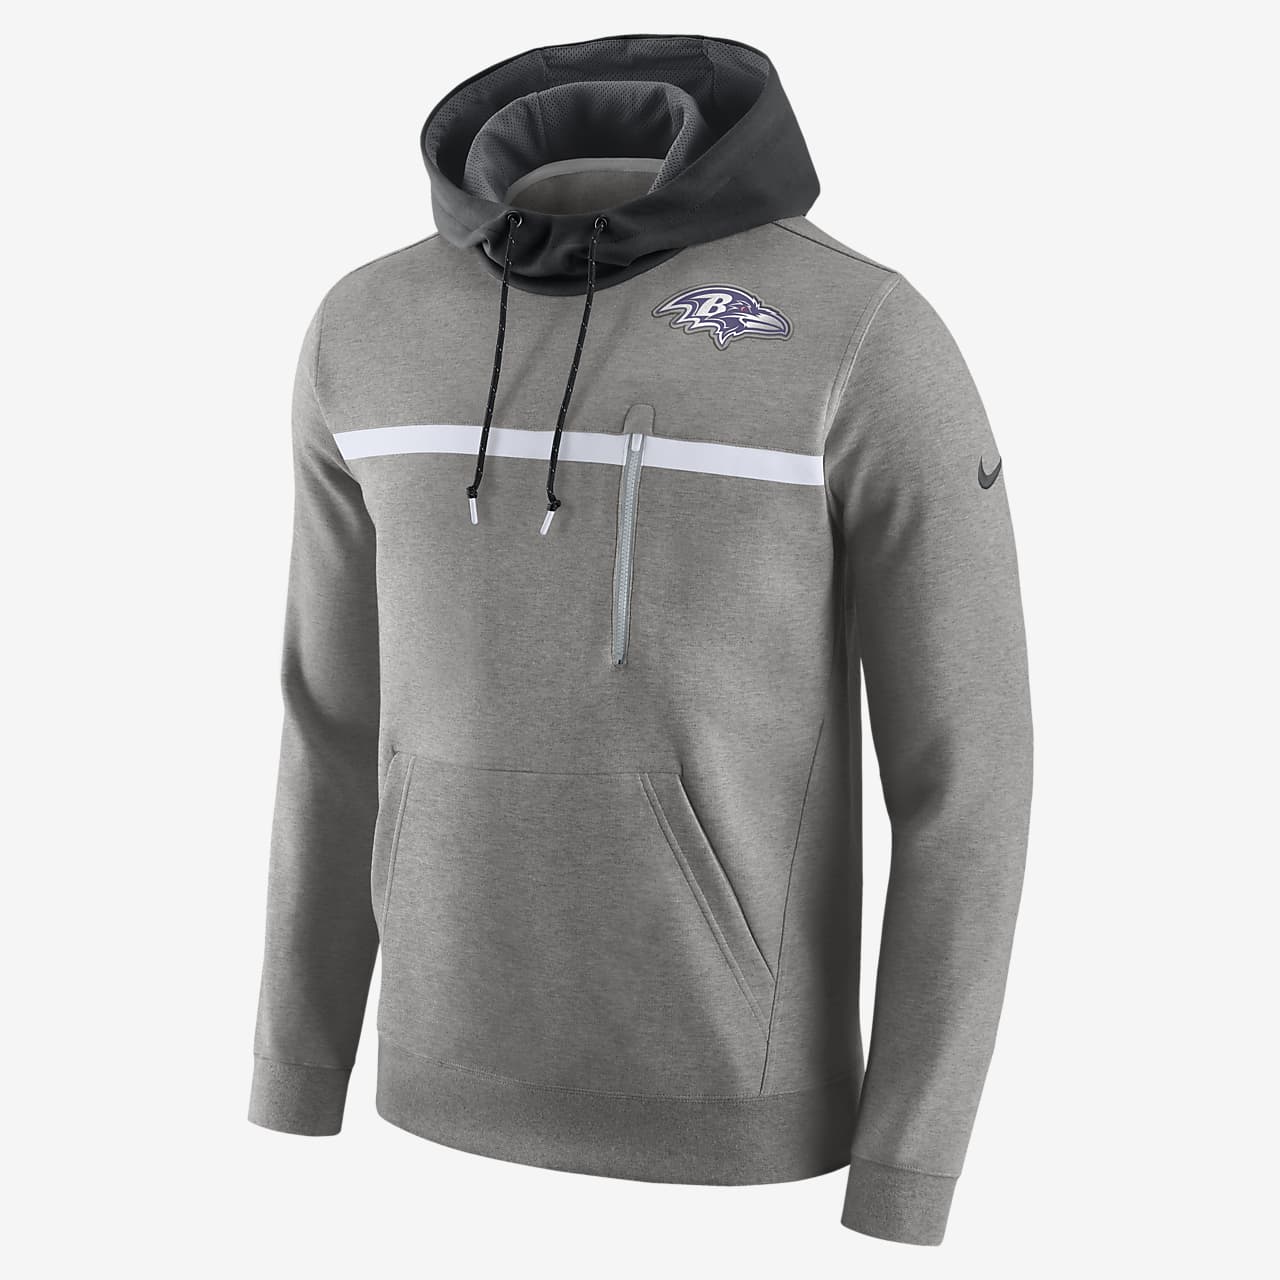 Nike Championship Drive Sweatshirt (NFL Ravens) Men's Hoodie